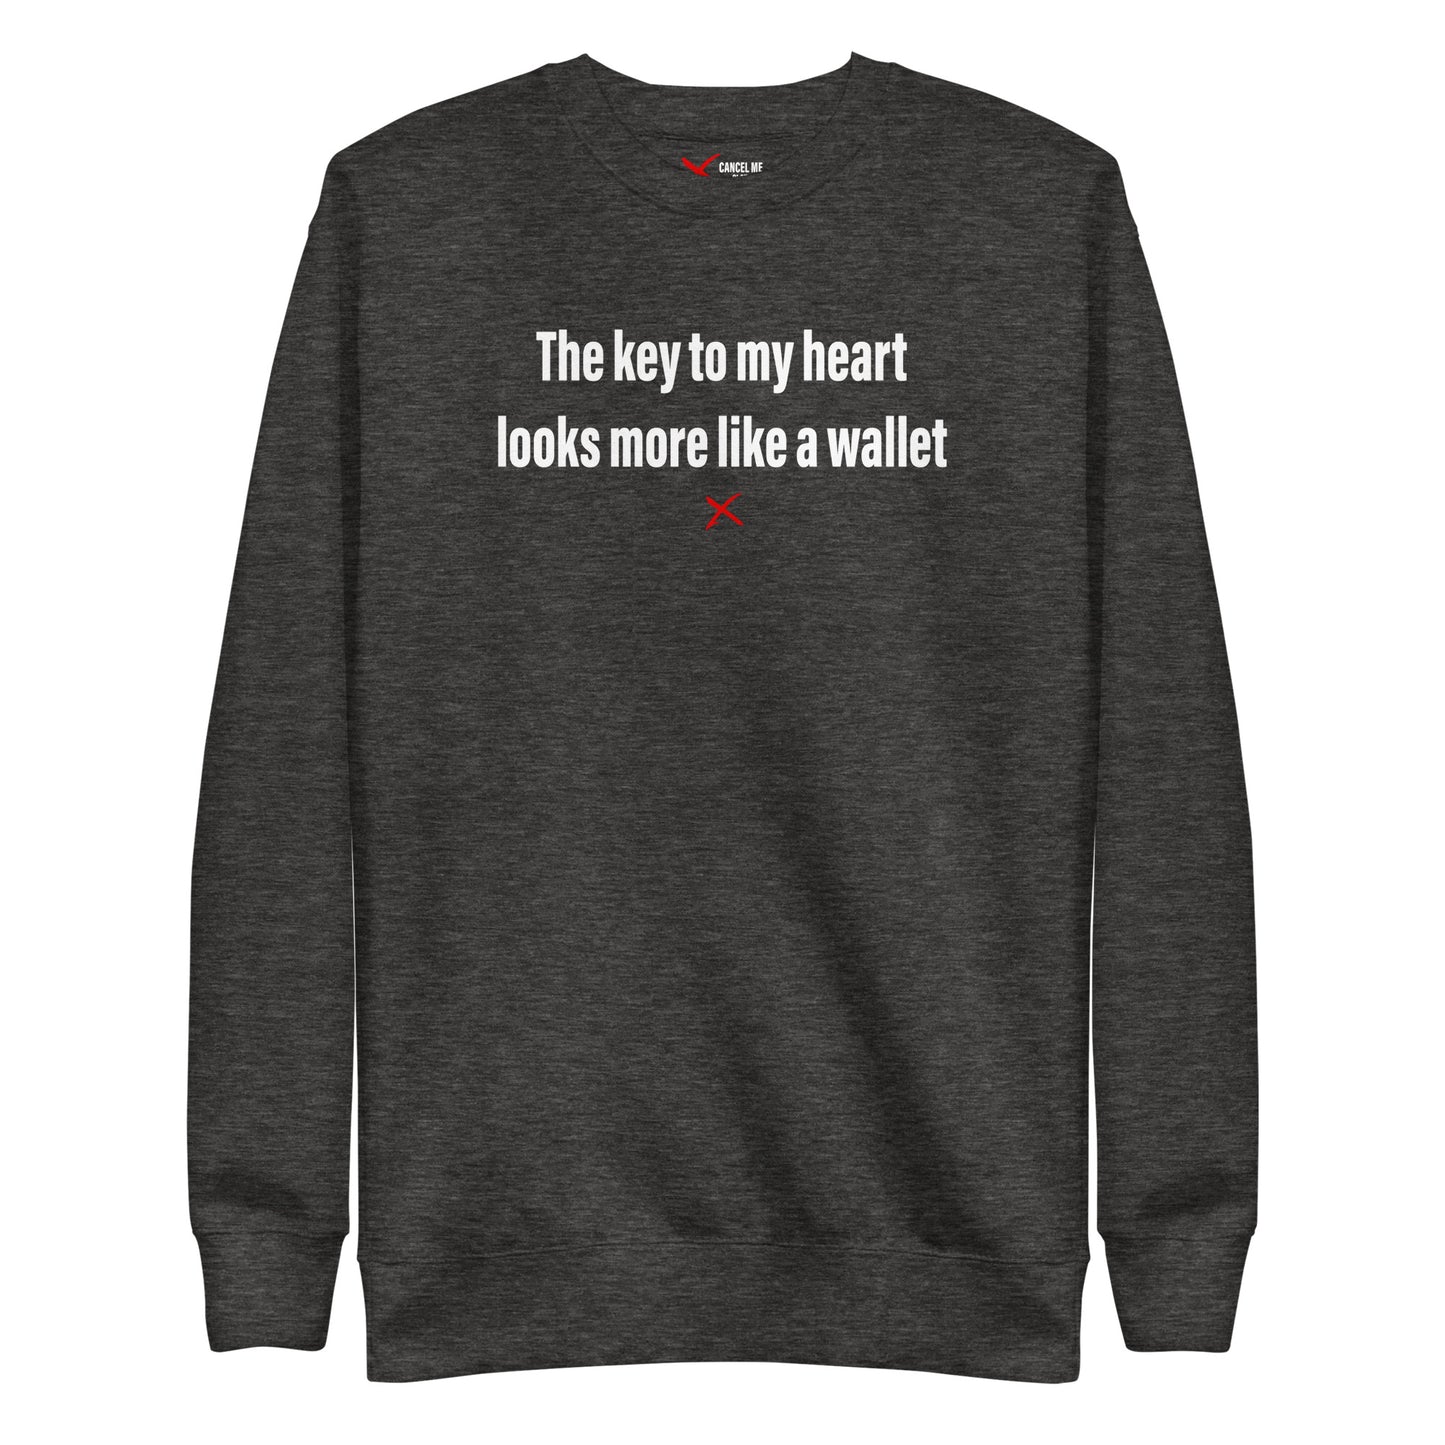 The key to my heart looks more like a wallet - Sweatshirt